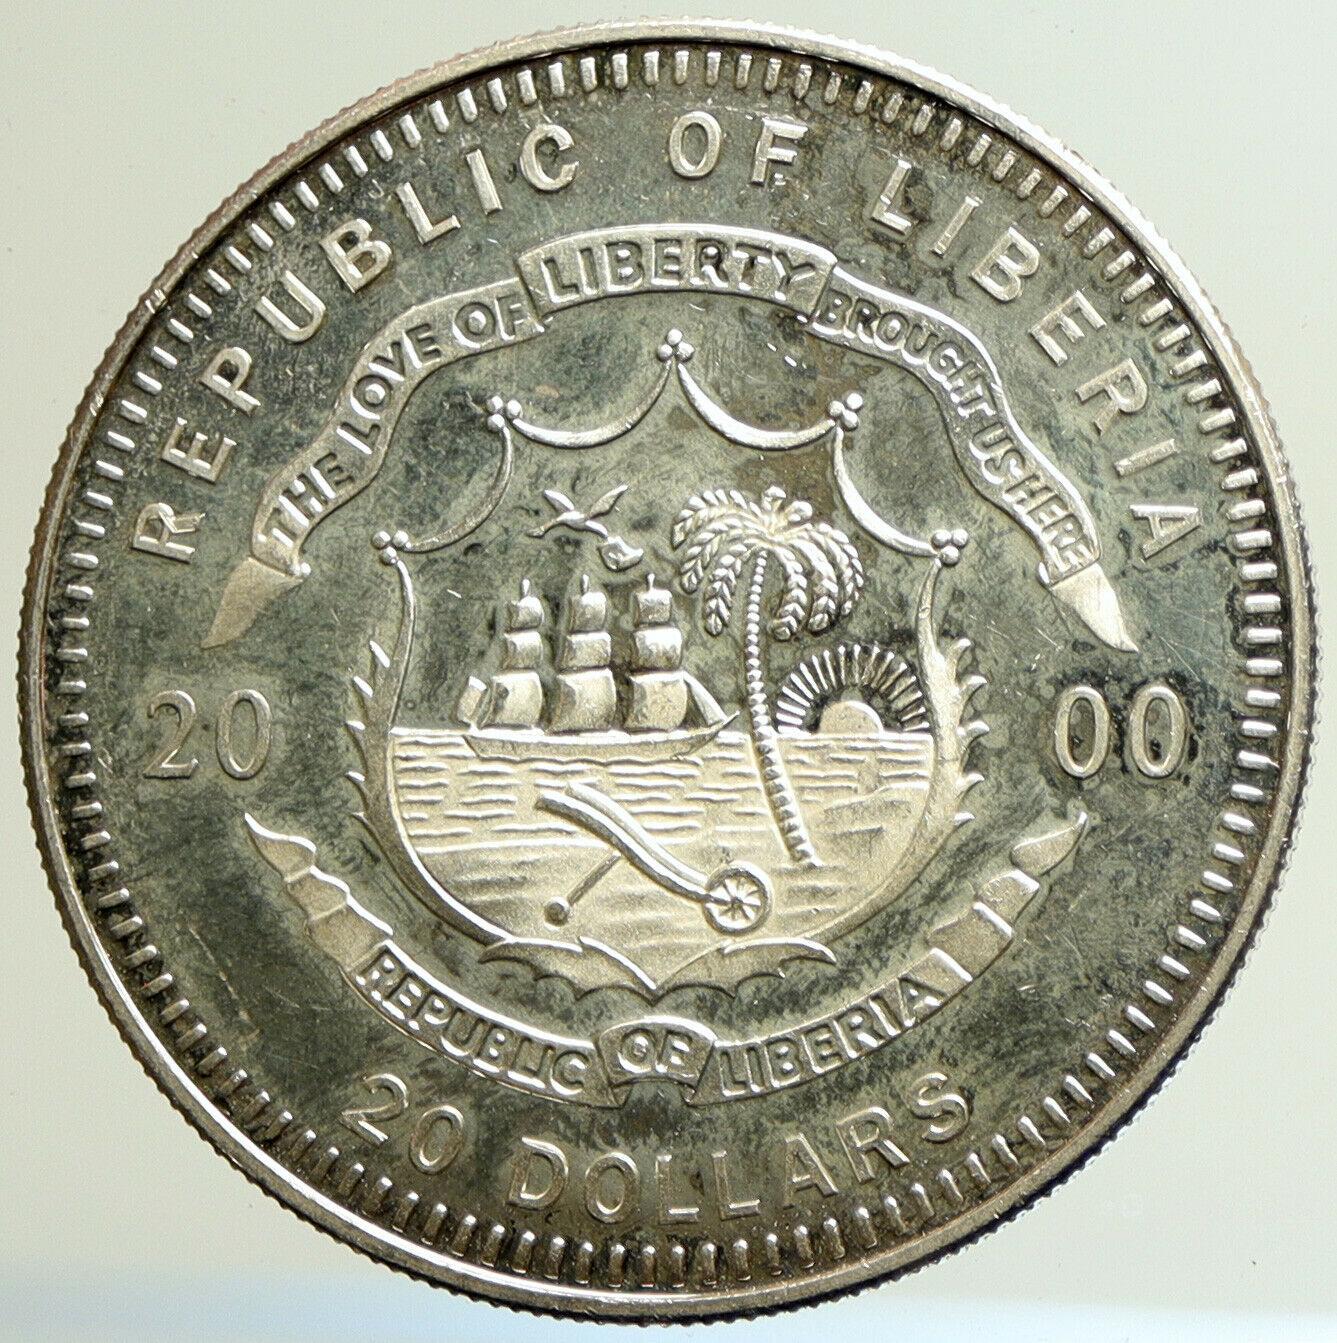 2000 LIBERIA USA President HARRY TRUMAN Proof Silver 20 Dollar Coin i104939